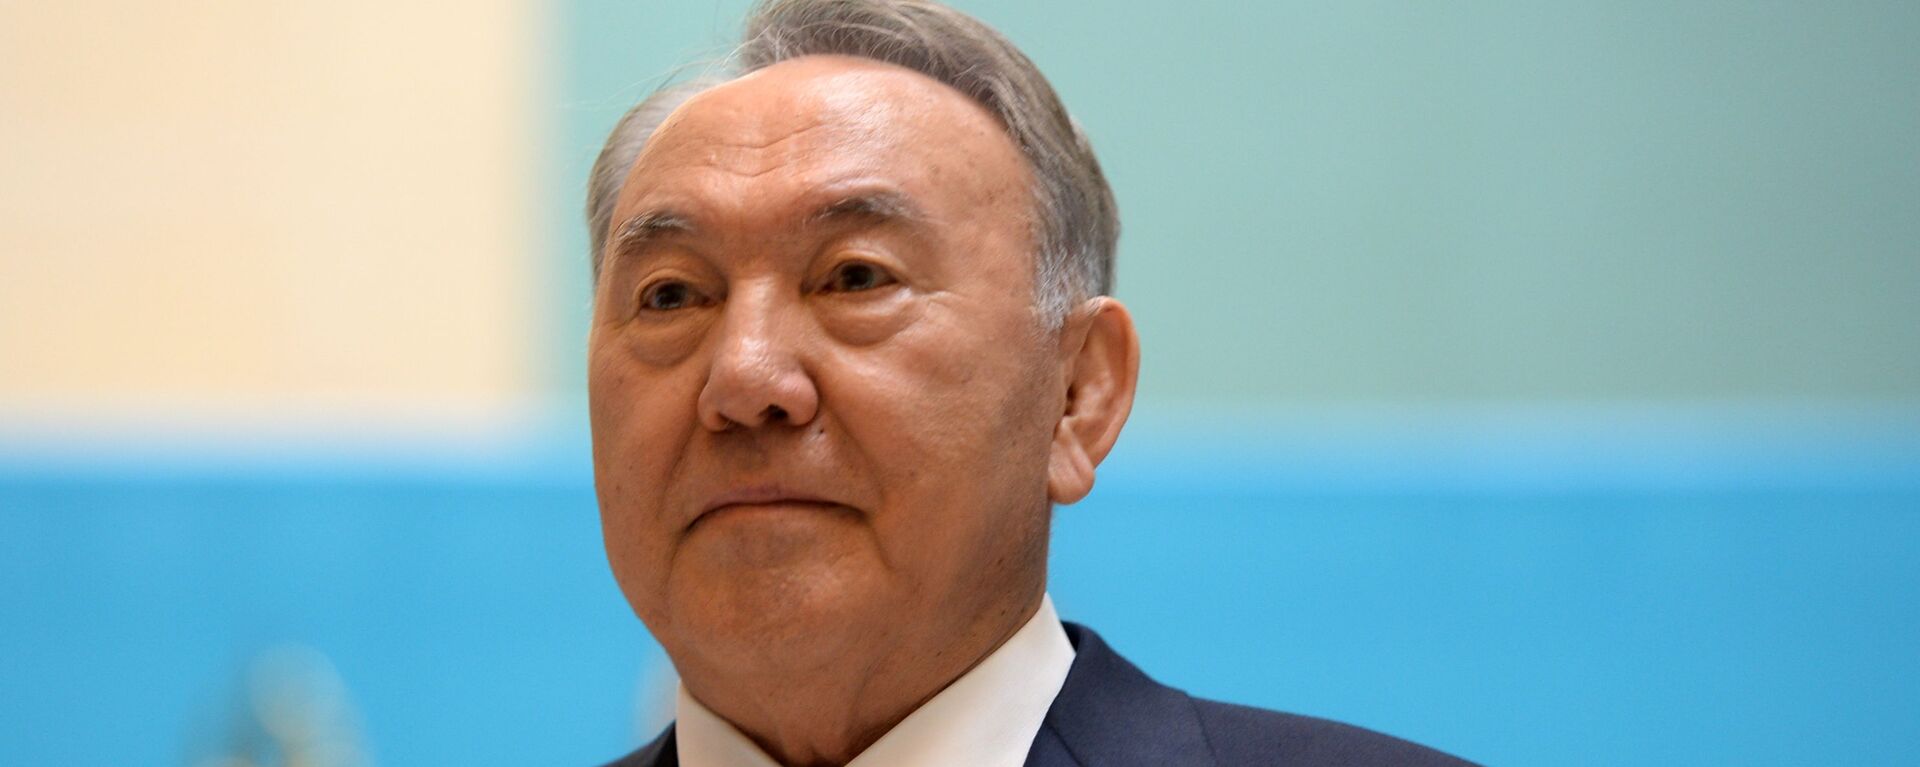 Президент Казахстана Нурсултан Назарбаев - Sputnik Latvija, 1920, 09.06.2016